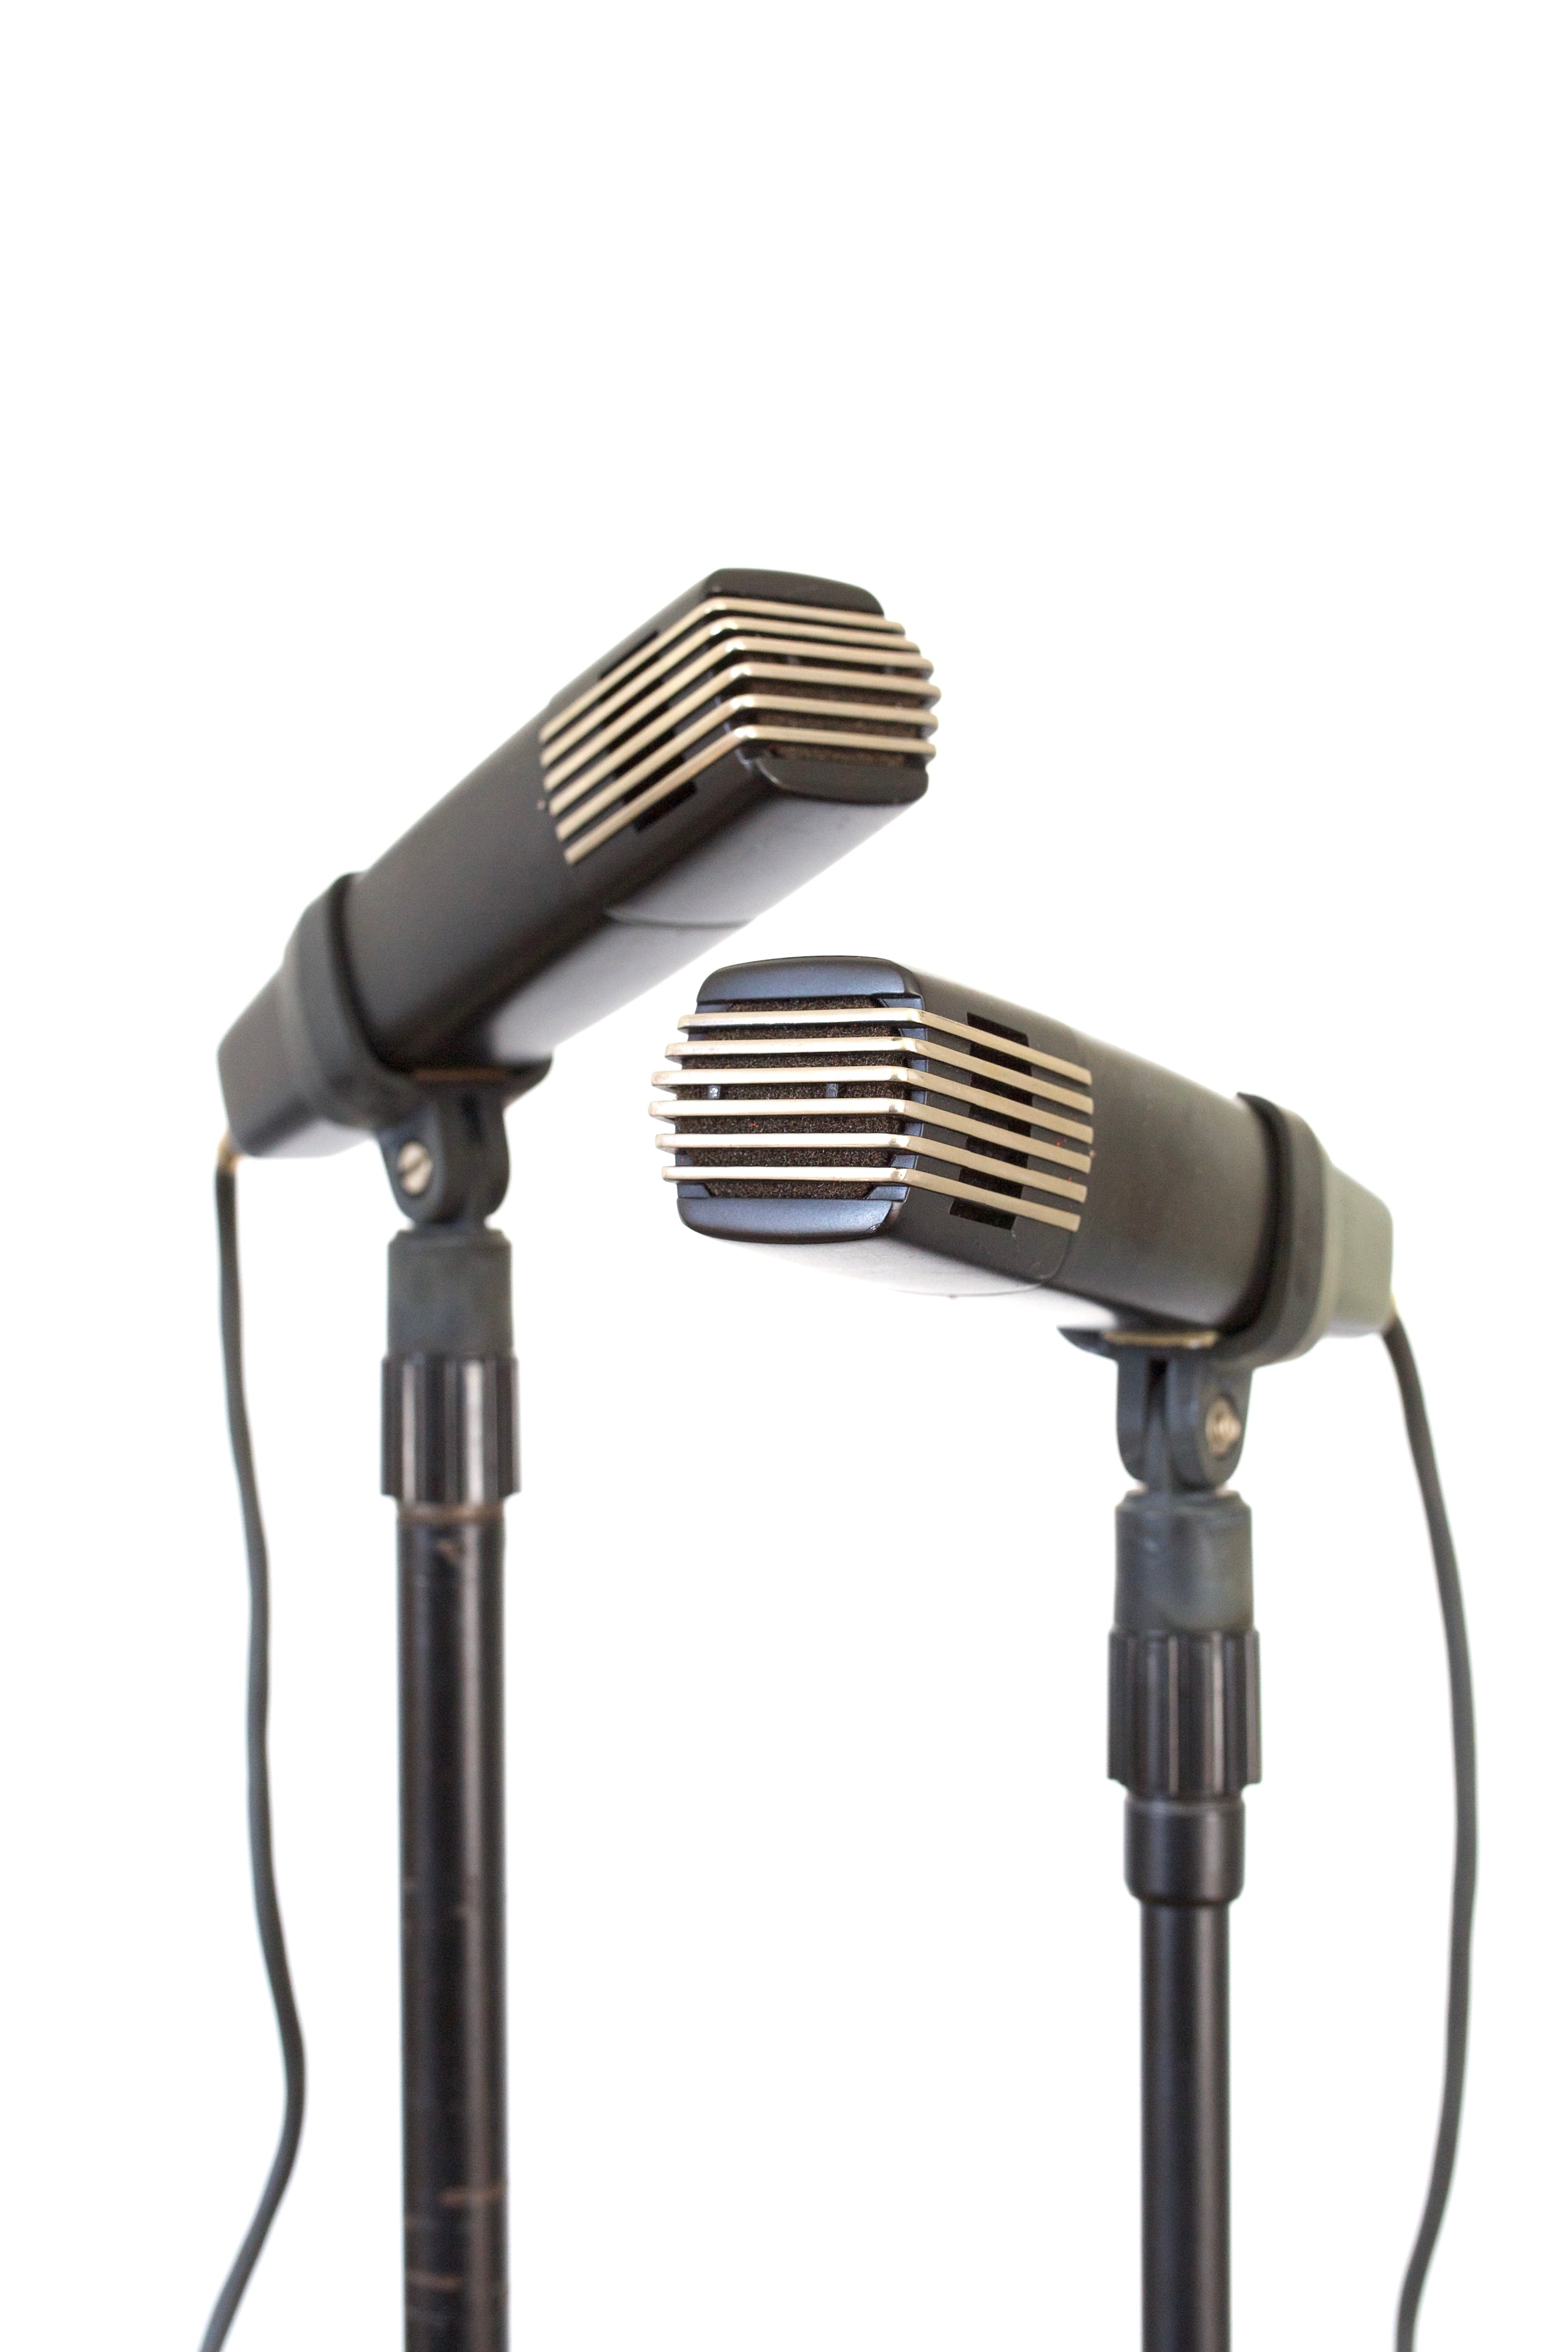 Beyerdynamic M818 (Advent MDC-1) Stereo Dynamic Microphones